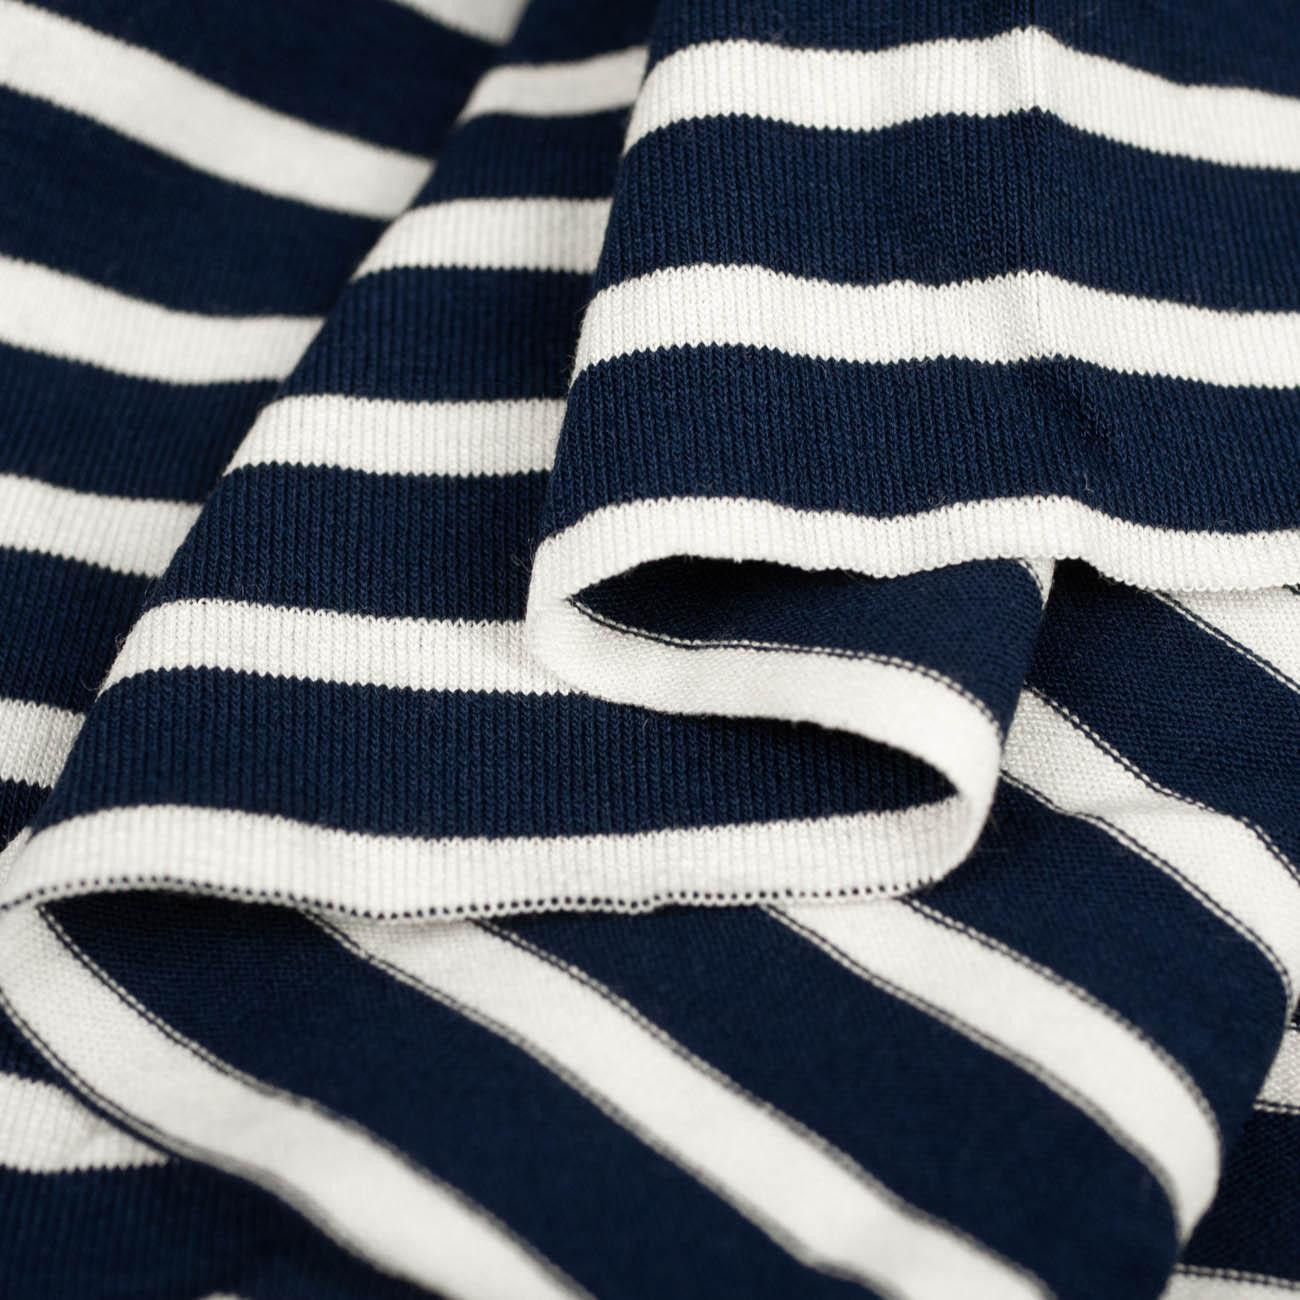 STRIPES DARK BLUE / WHITE 1,0cm x 0,5cm - Viscose jersey